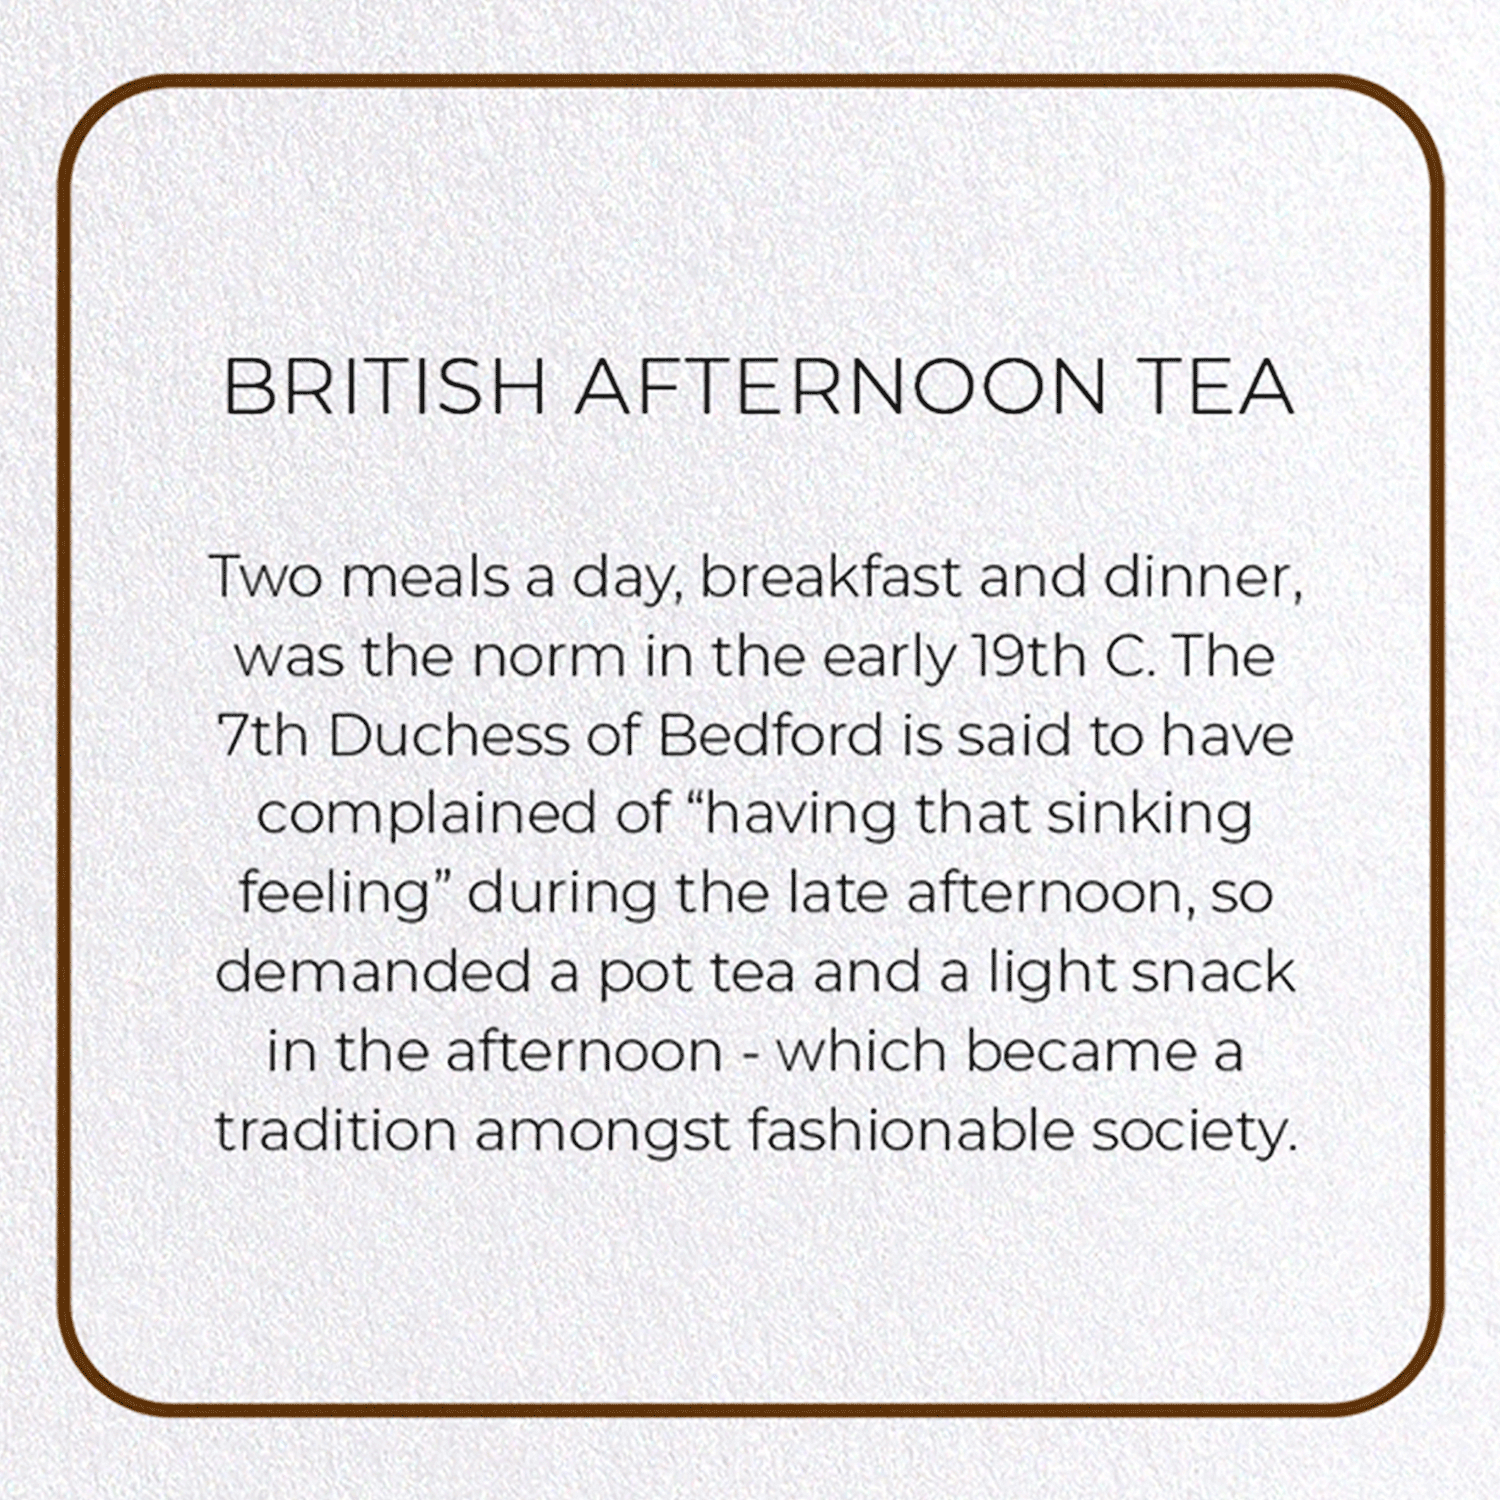 BRITISH AFTERNOON TEA: Photo Greeting Card